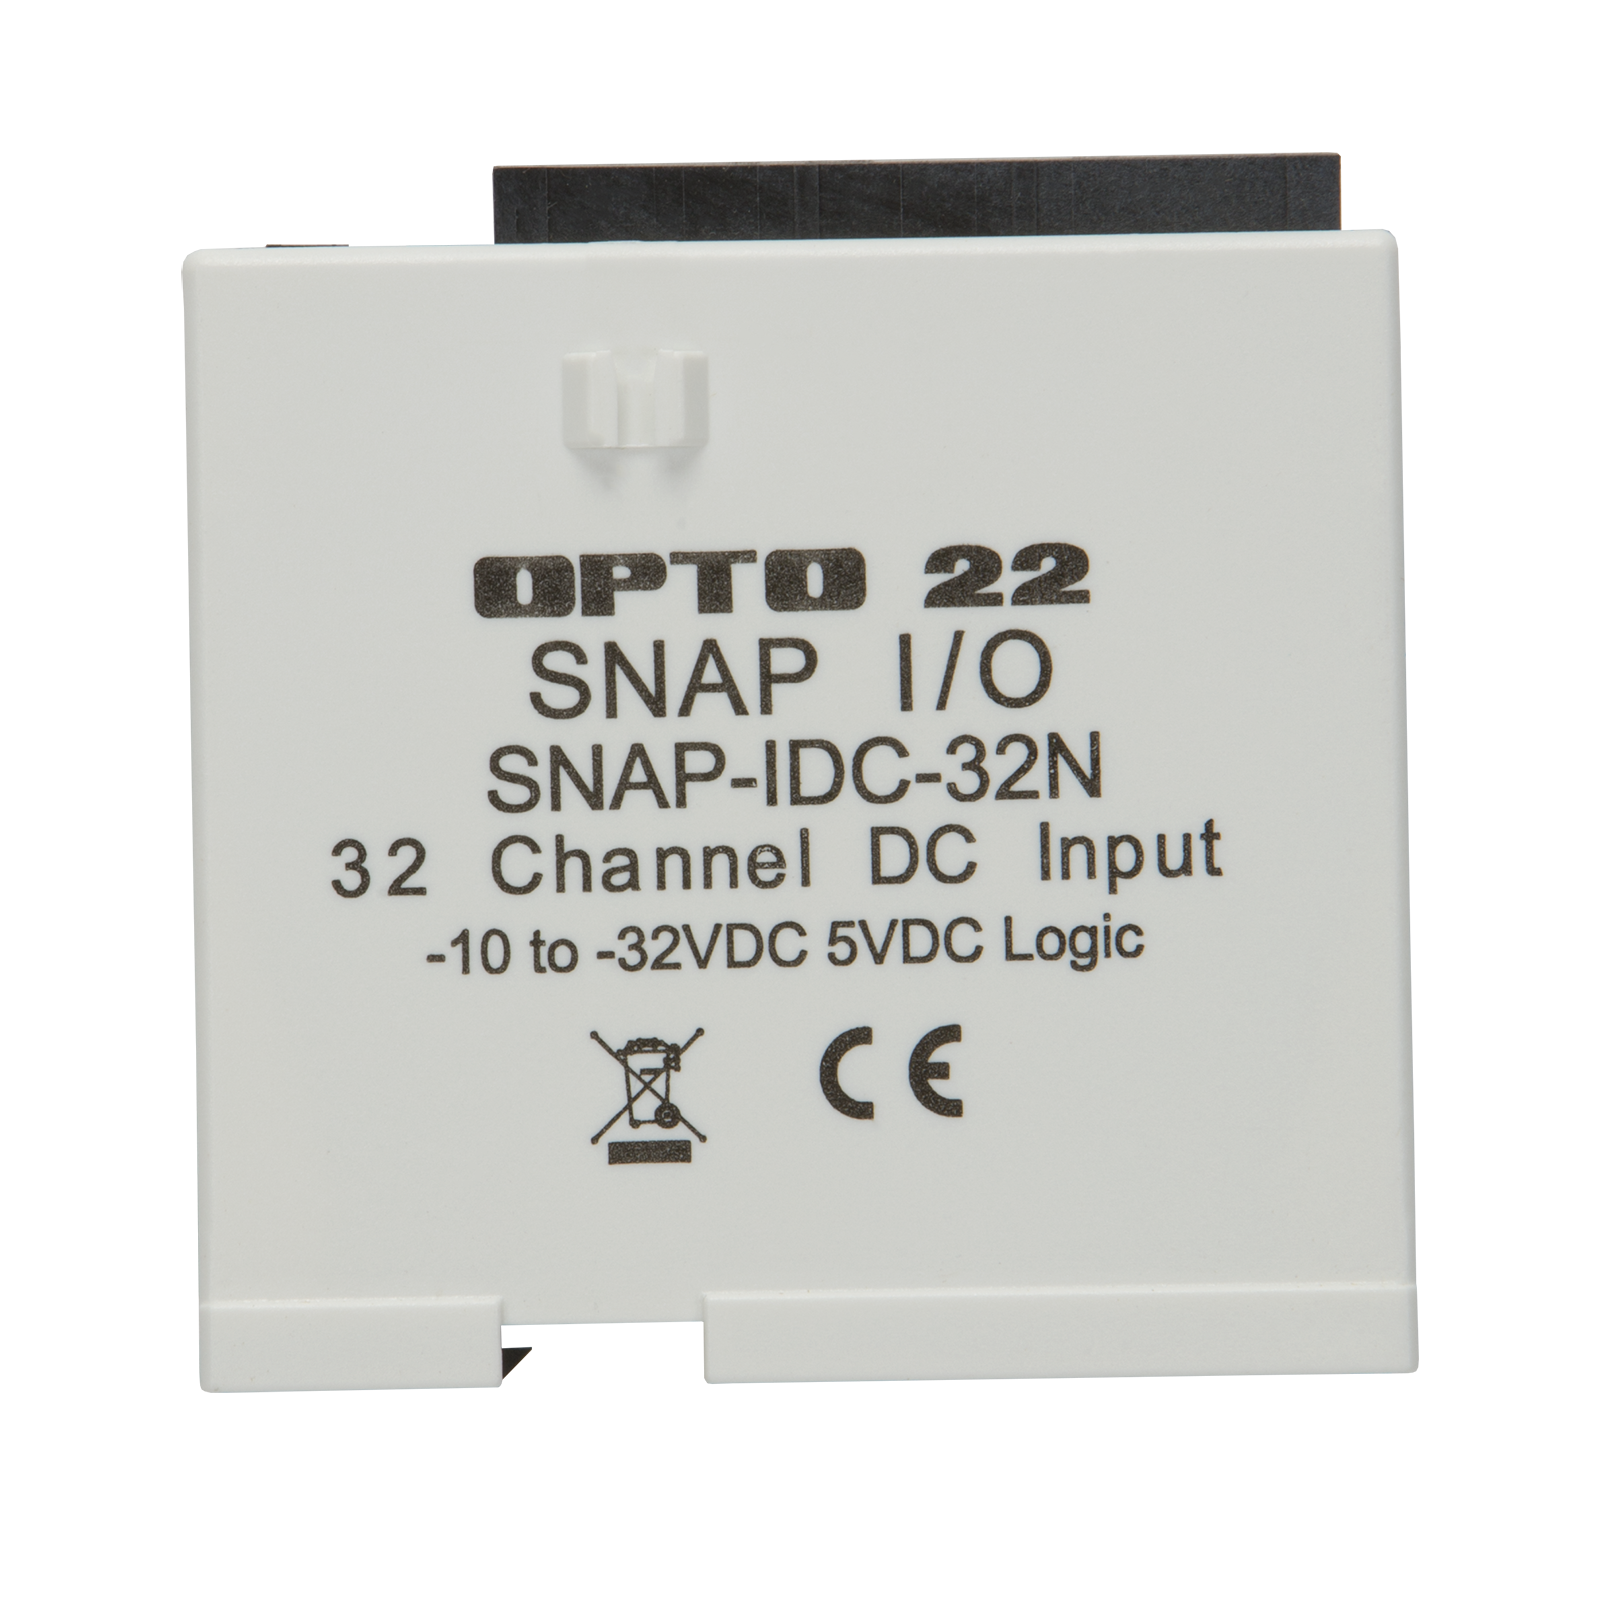 4-Channel Discrete Input Module Opto 22 SNAP-IDC5-FAST-A 18-32 VDC/VAC SNAP High-Speed Digital 